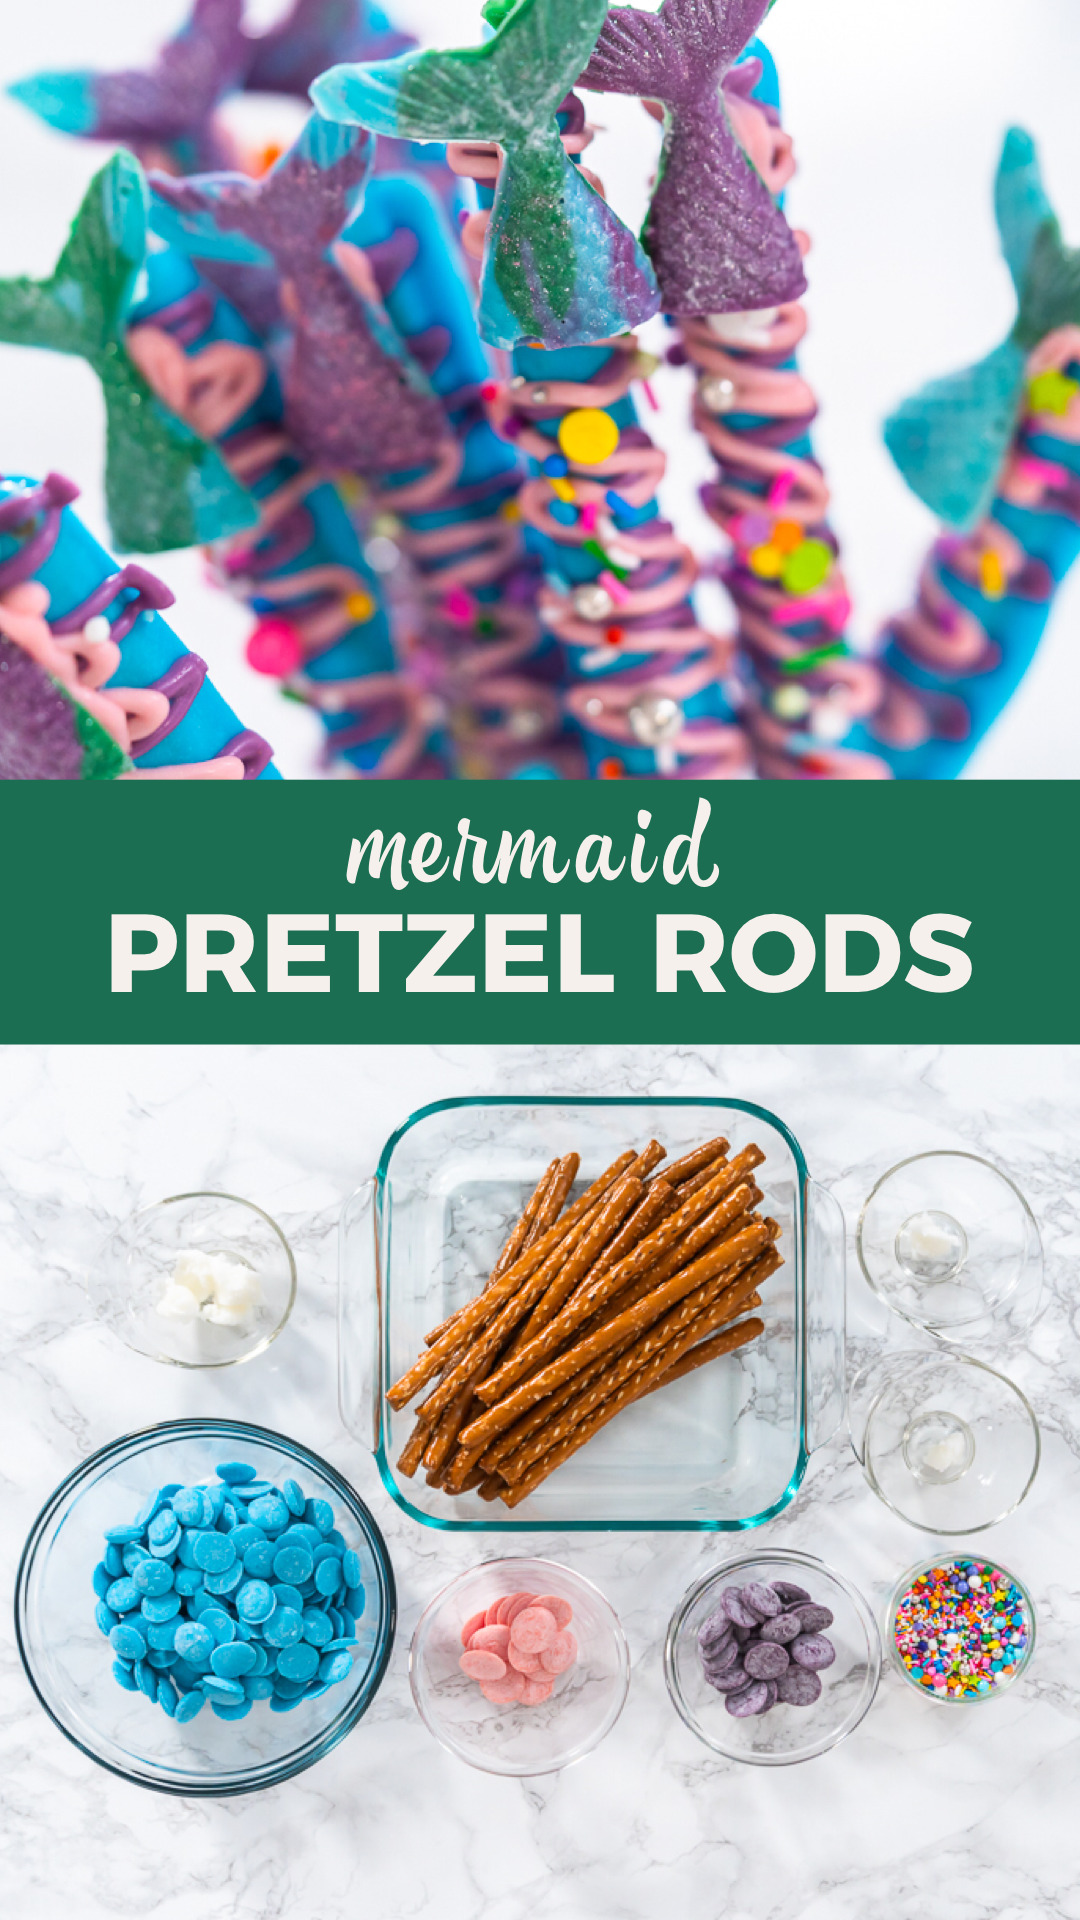 Mermaid pretzel rods